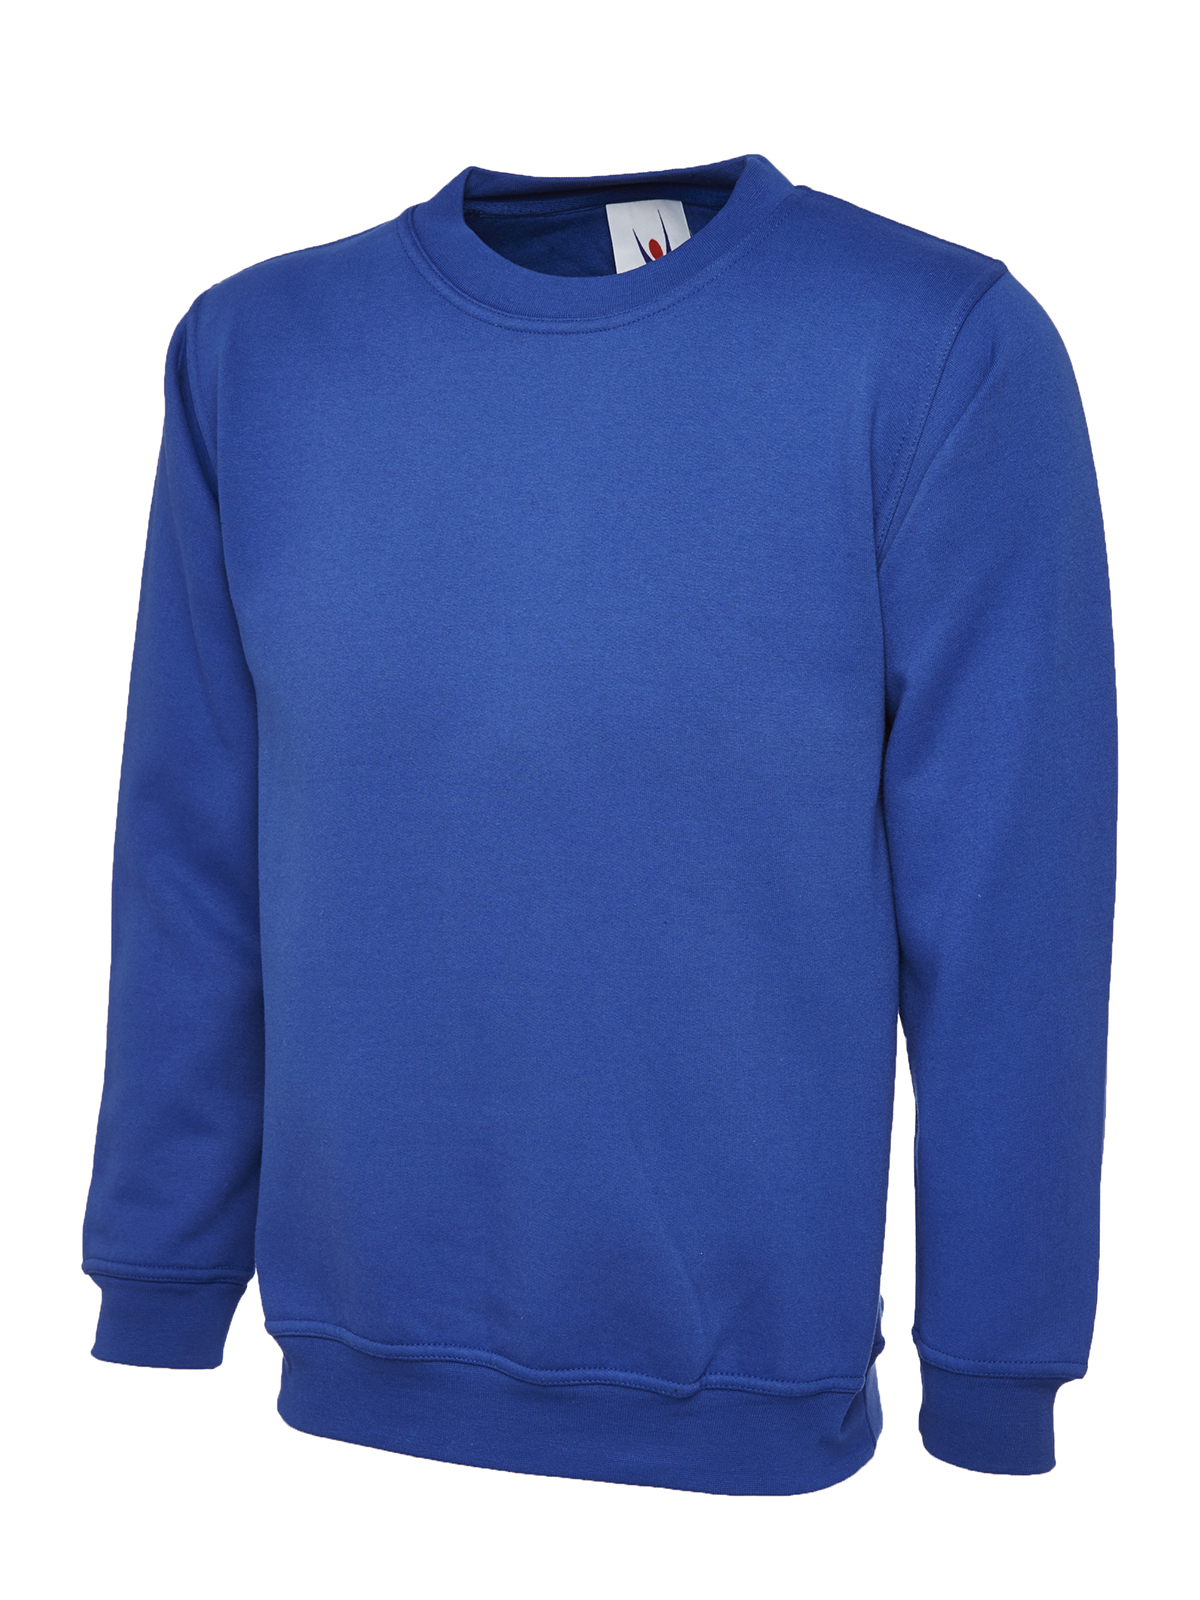 Uneek Herren Sweatshirt Classic kornblau